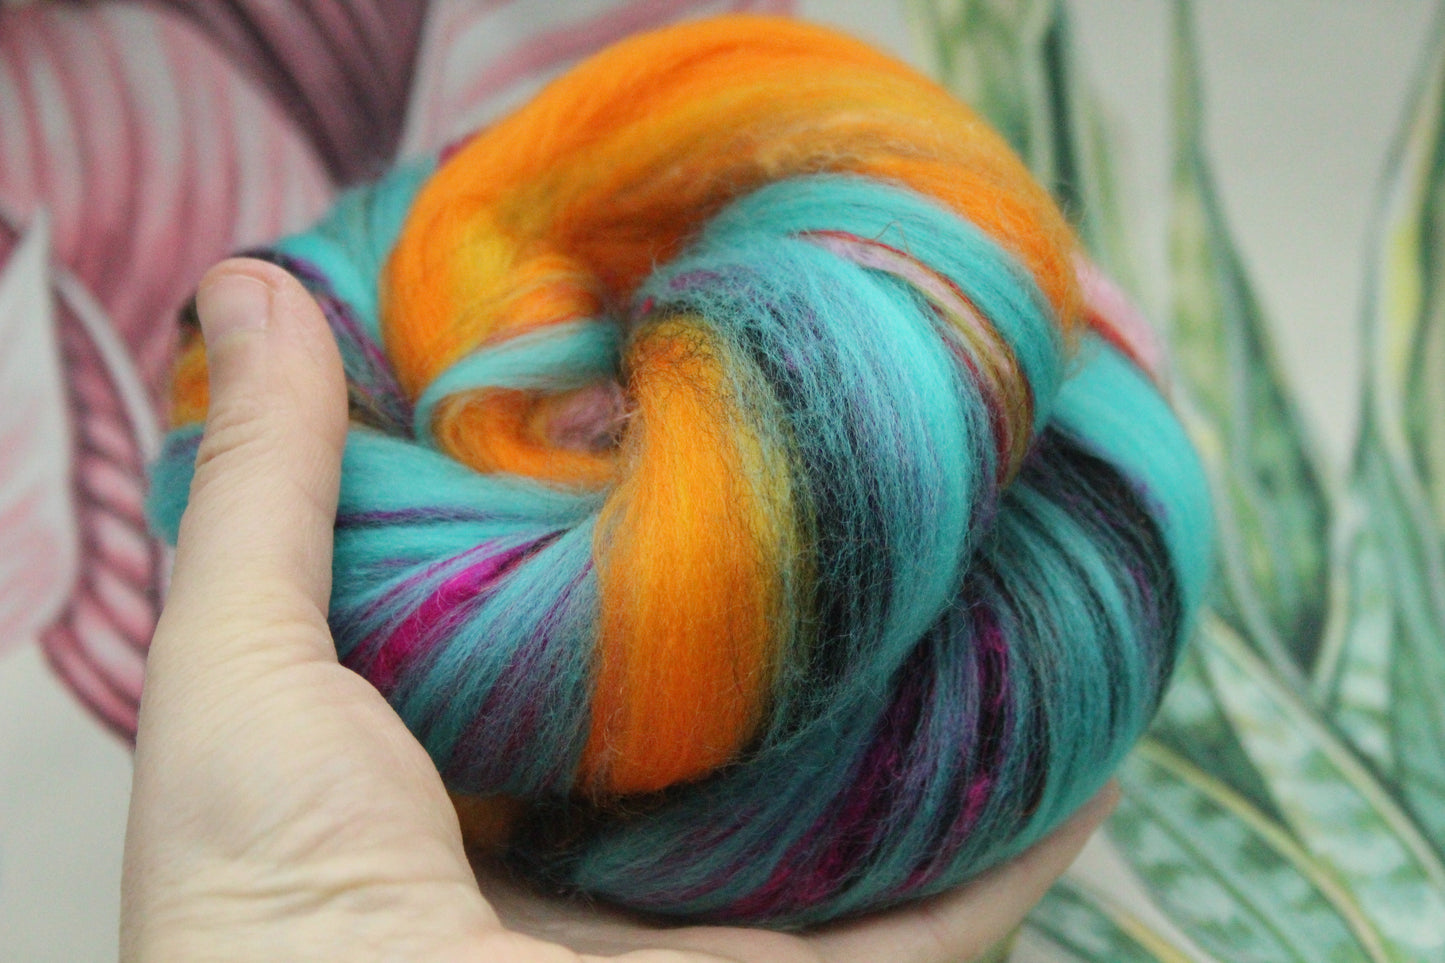 Wool Blend - Orange Blue Black - 24 grams / 0.8 oz  - Fibre for felting, weaving or spinning